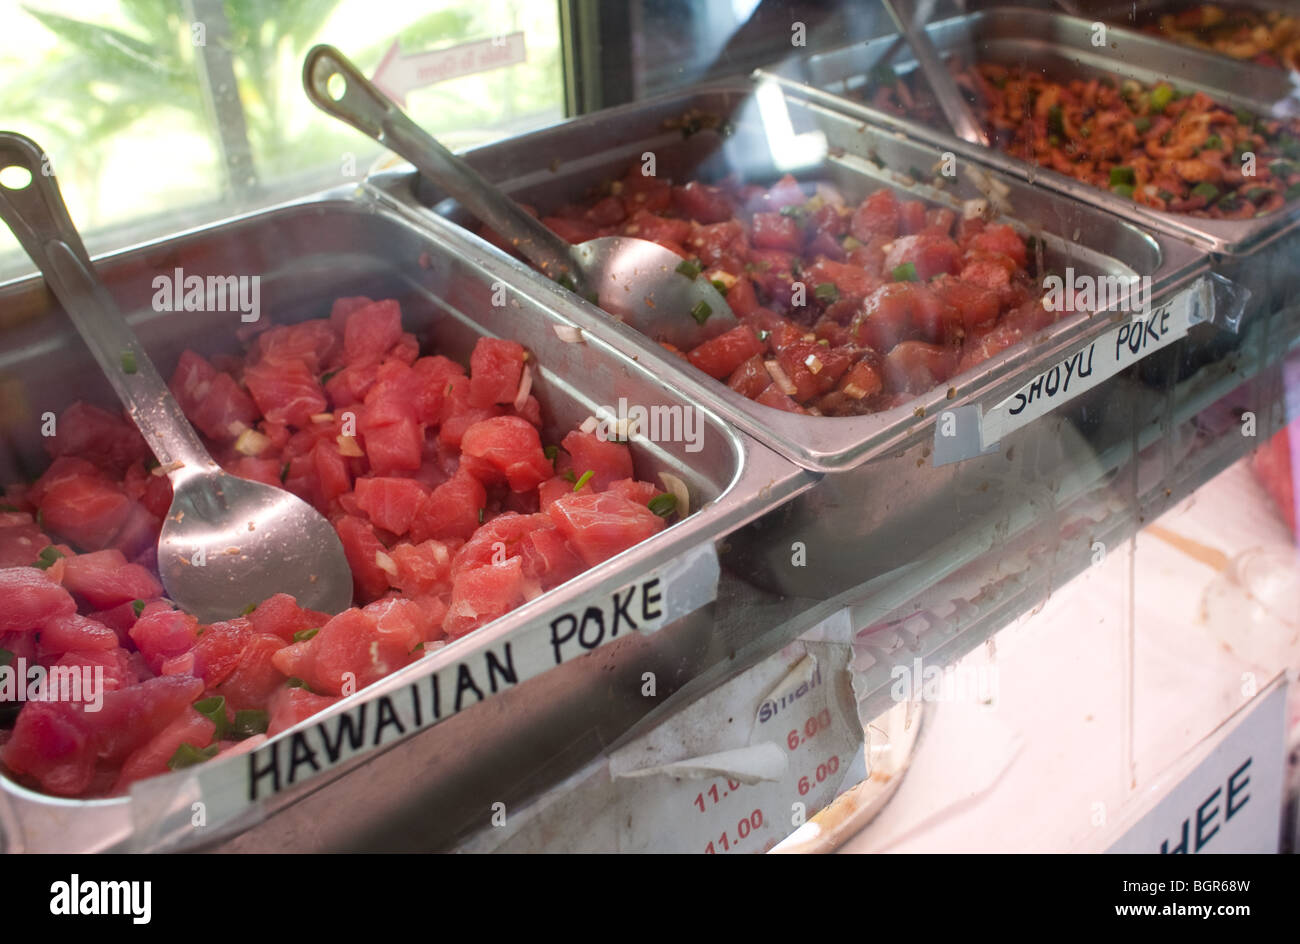 Poke hawaiano Foto Stock